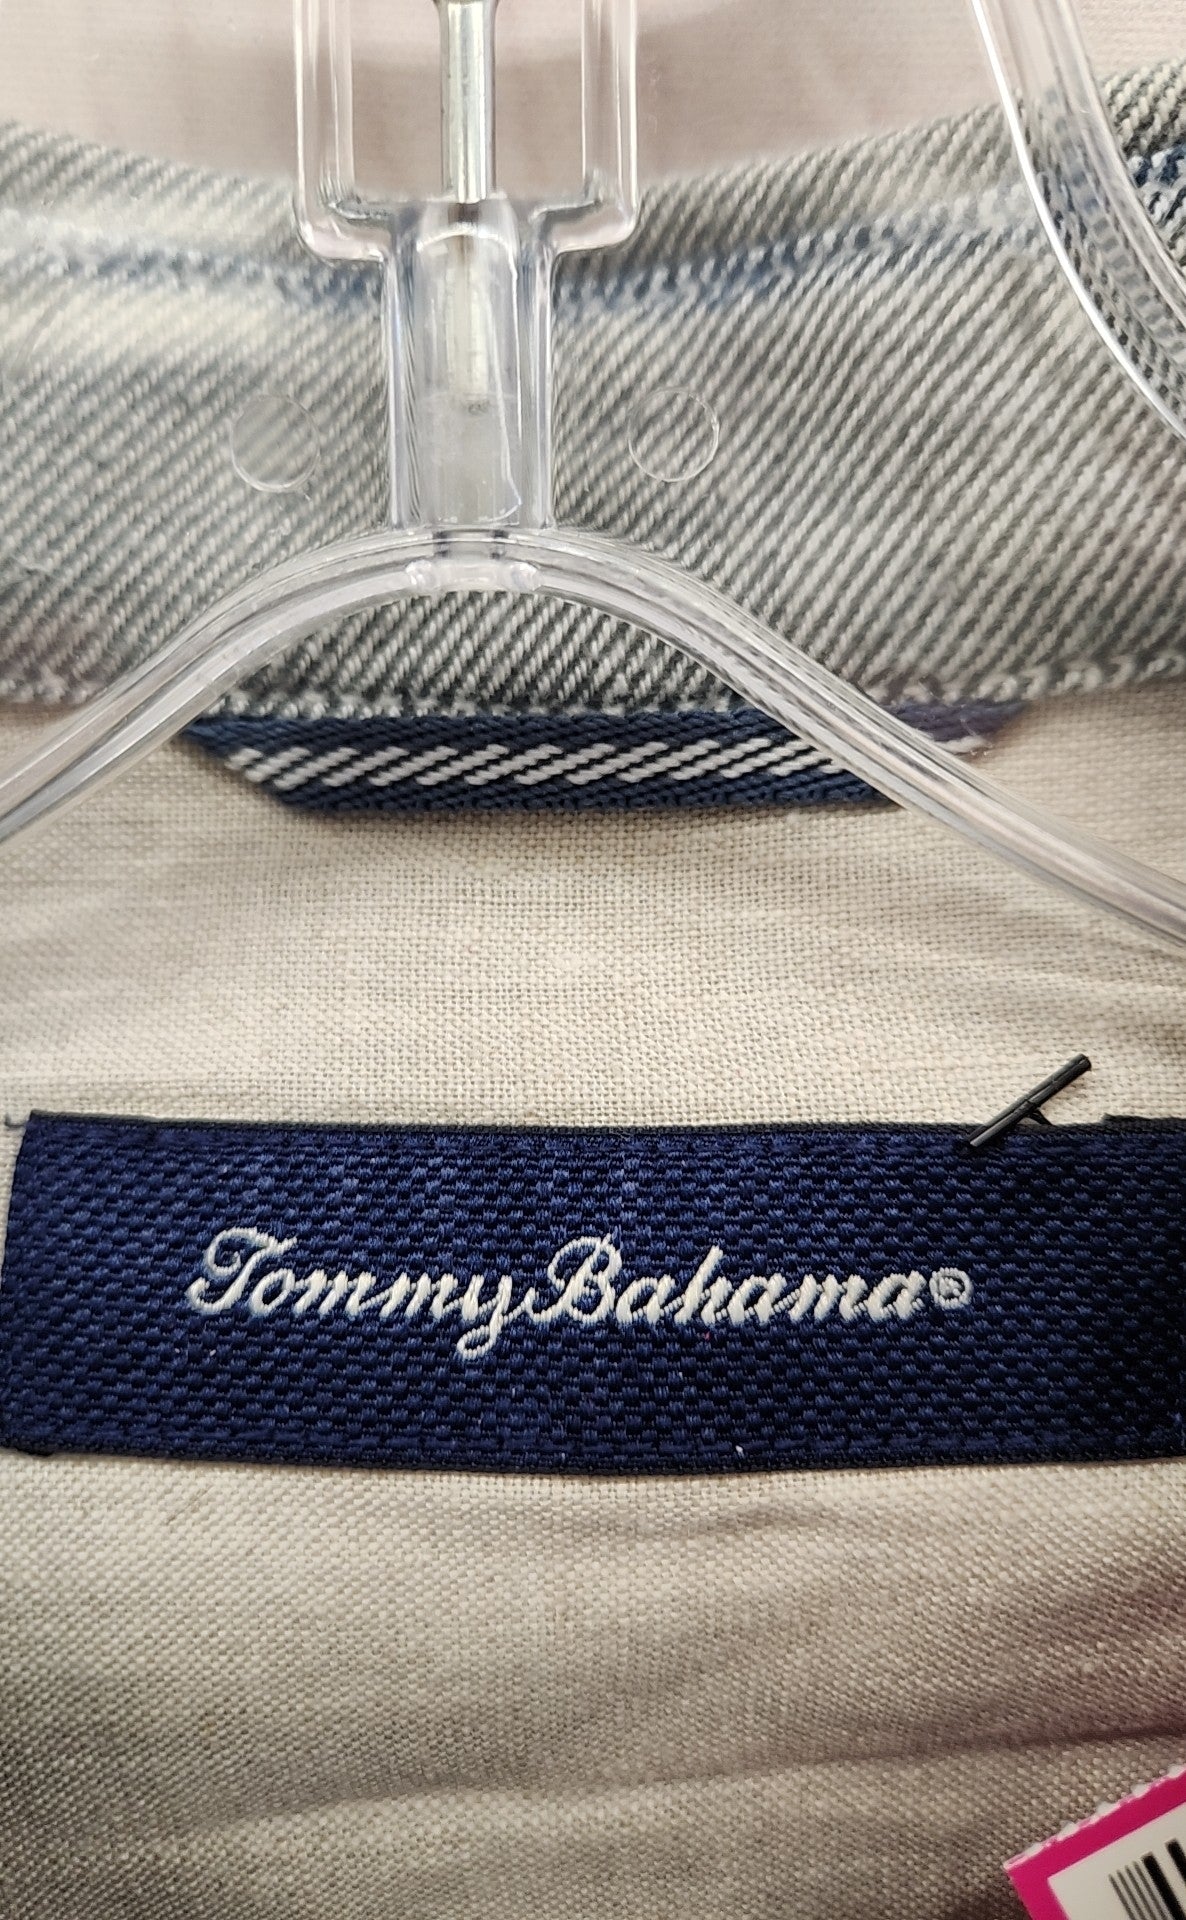 Tommy Bahama Men's Size M Blue Shirt